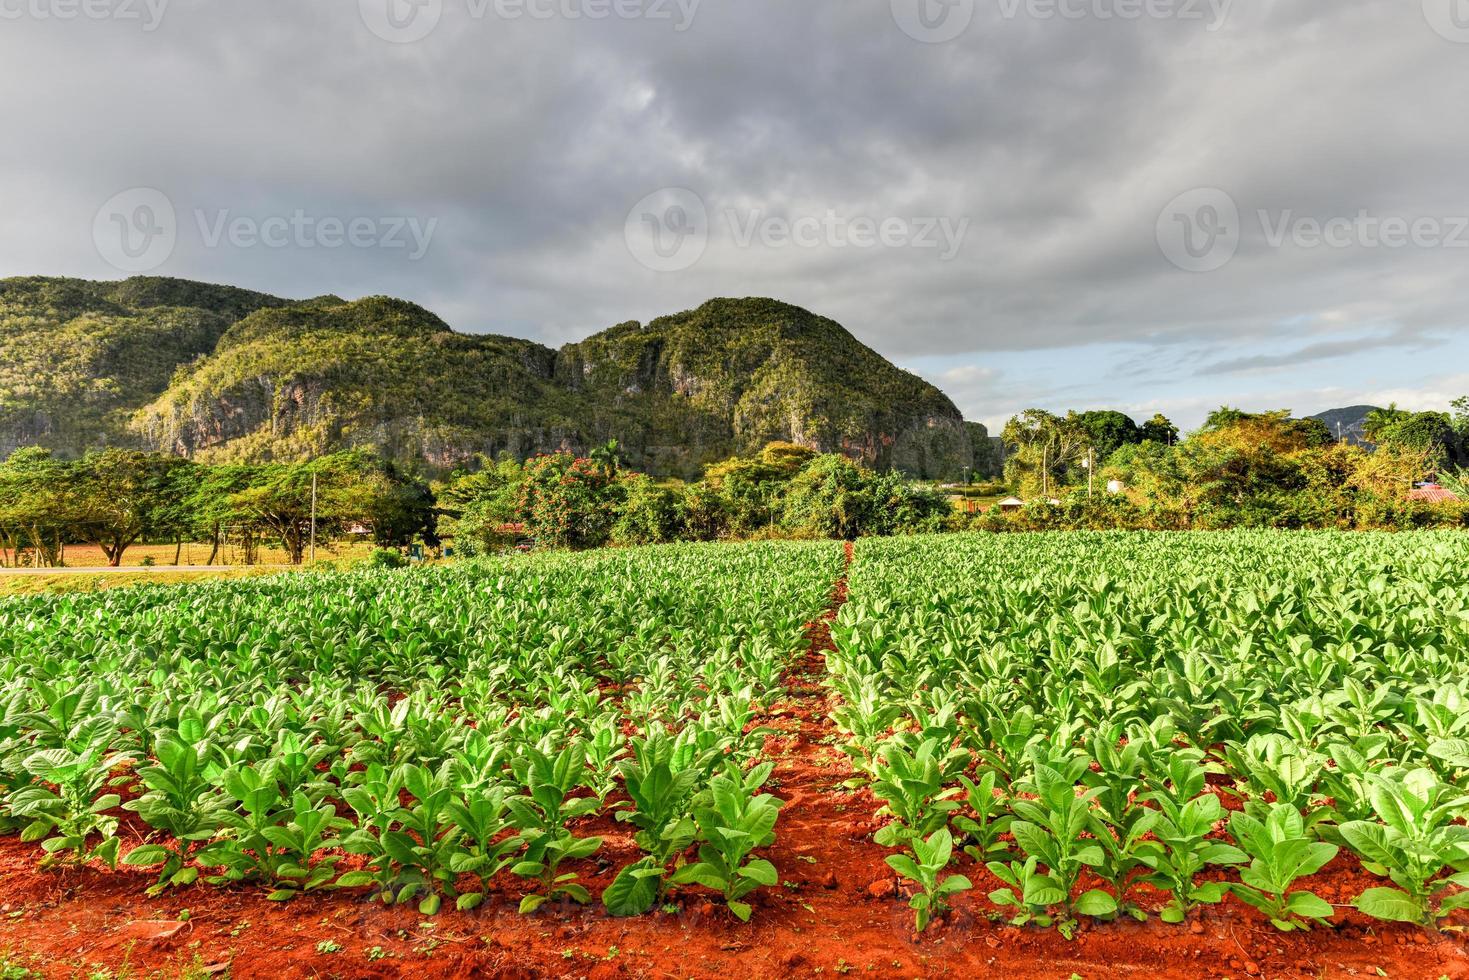 tabak plantage in de vinales vallei, noorden van Cuba. foto